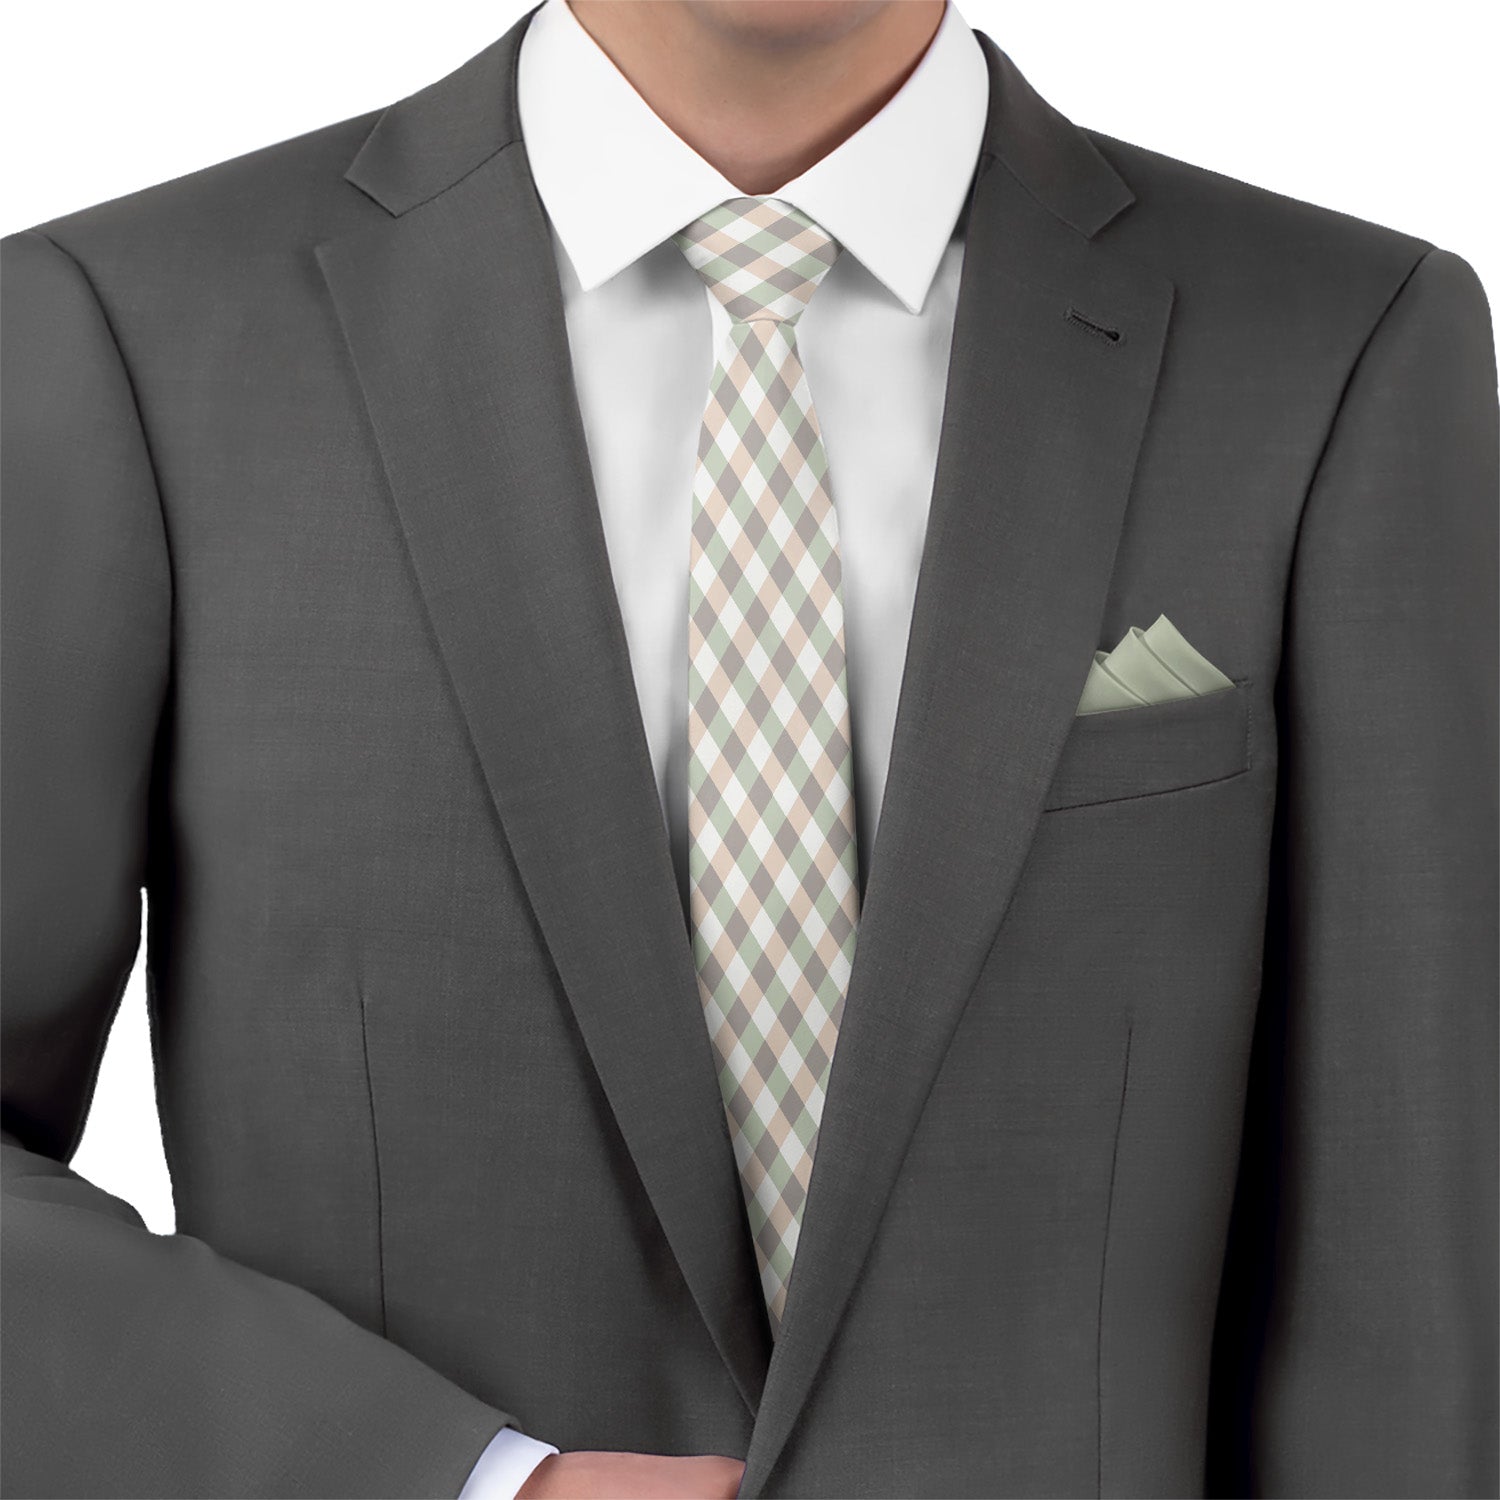 Diamond Plaid Necktie - Matching Pocket Square - Knotty Tie Co.